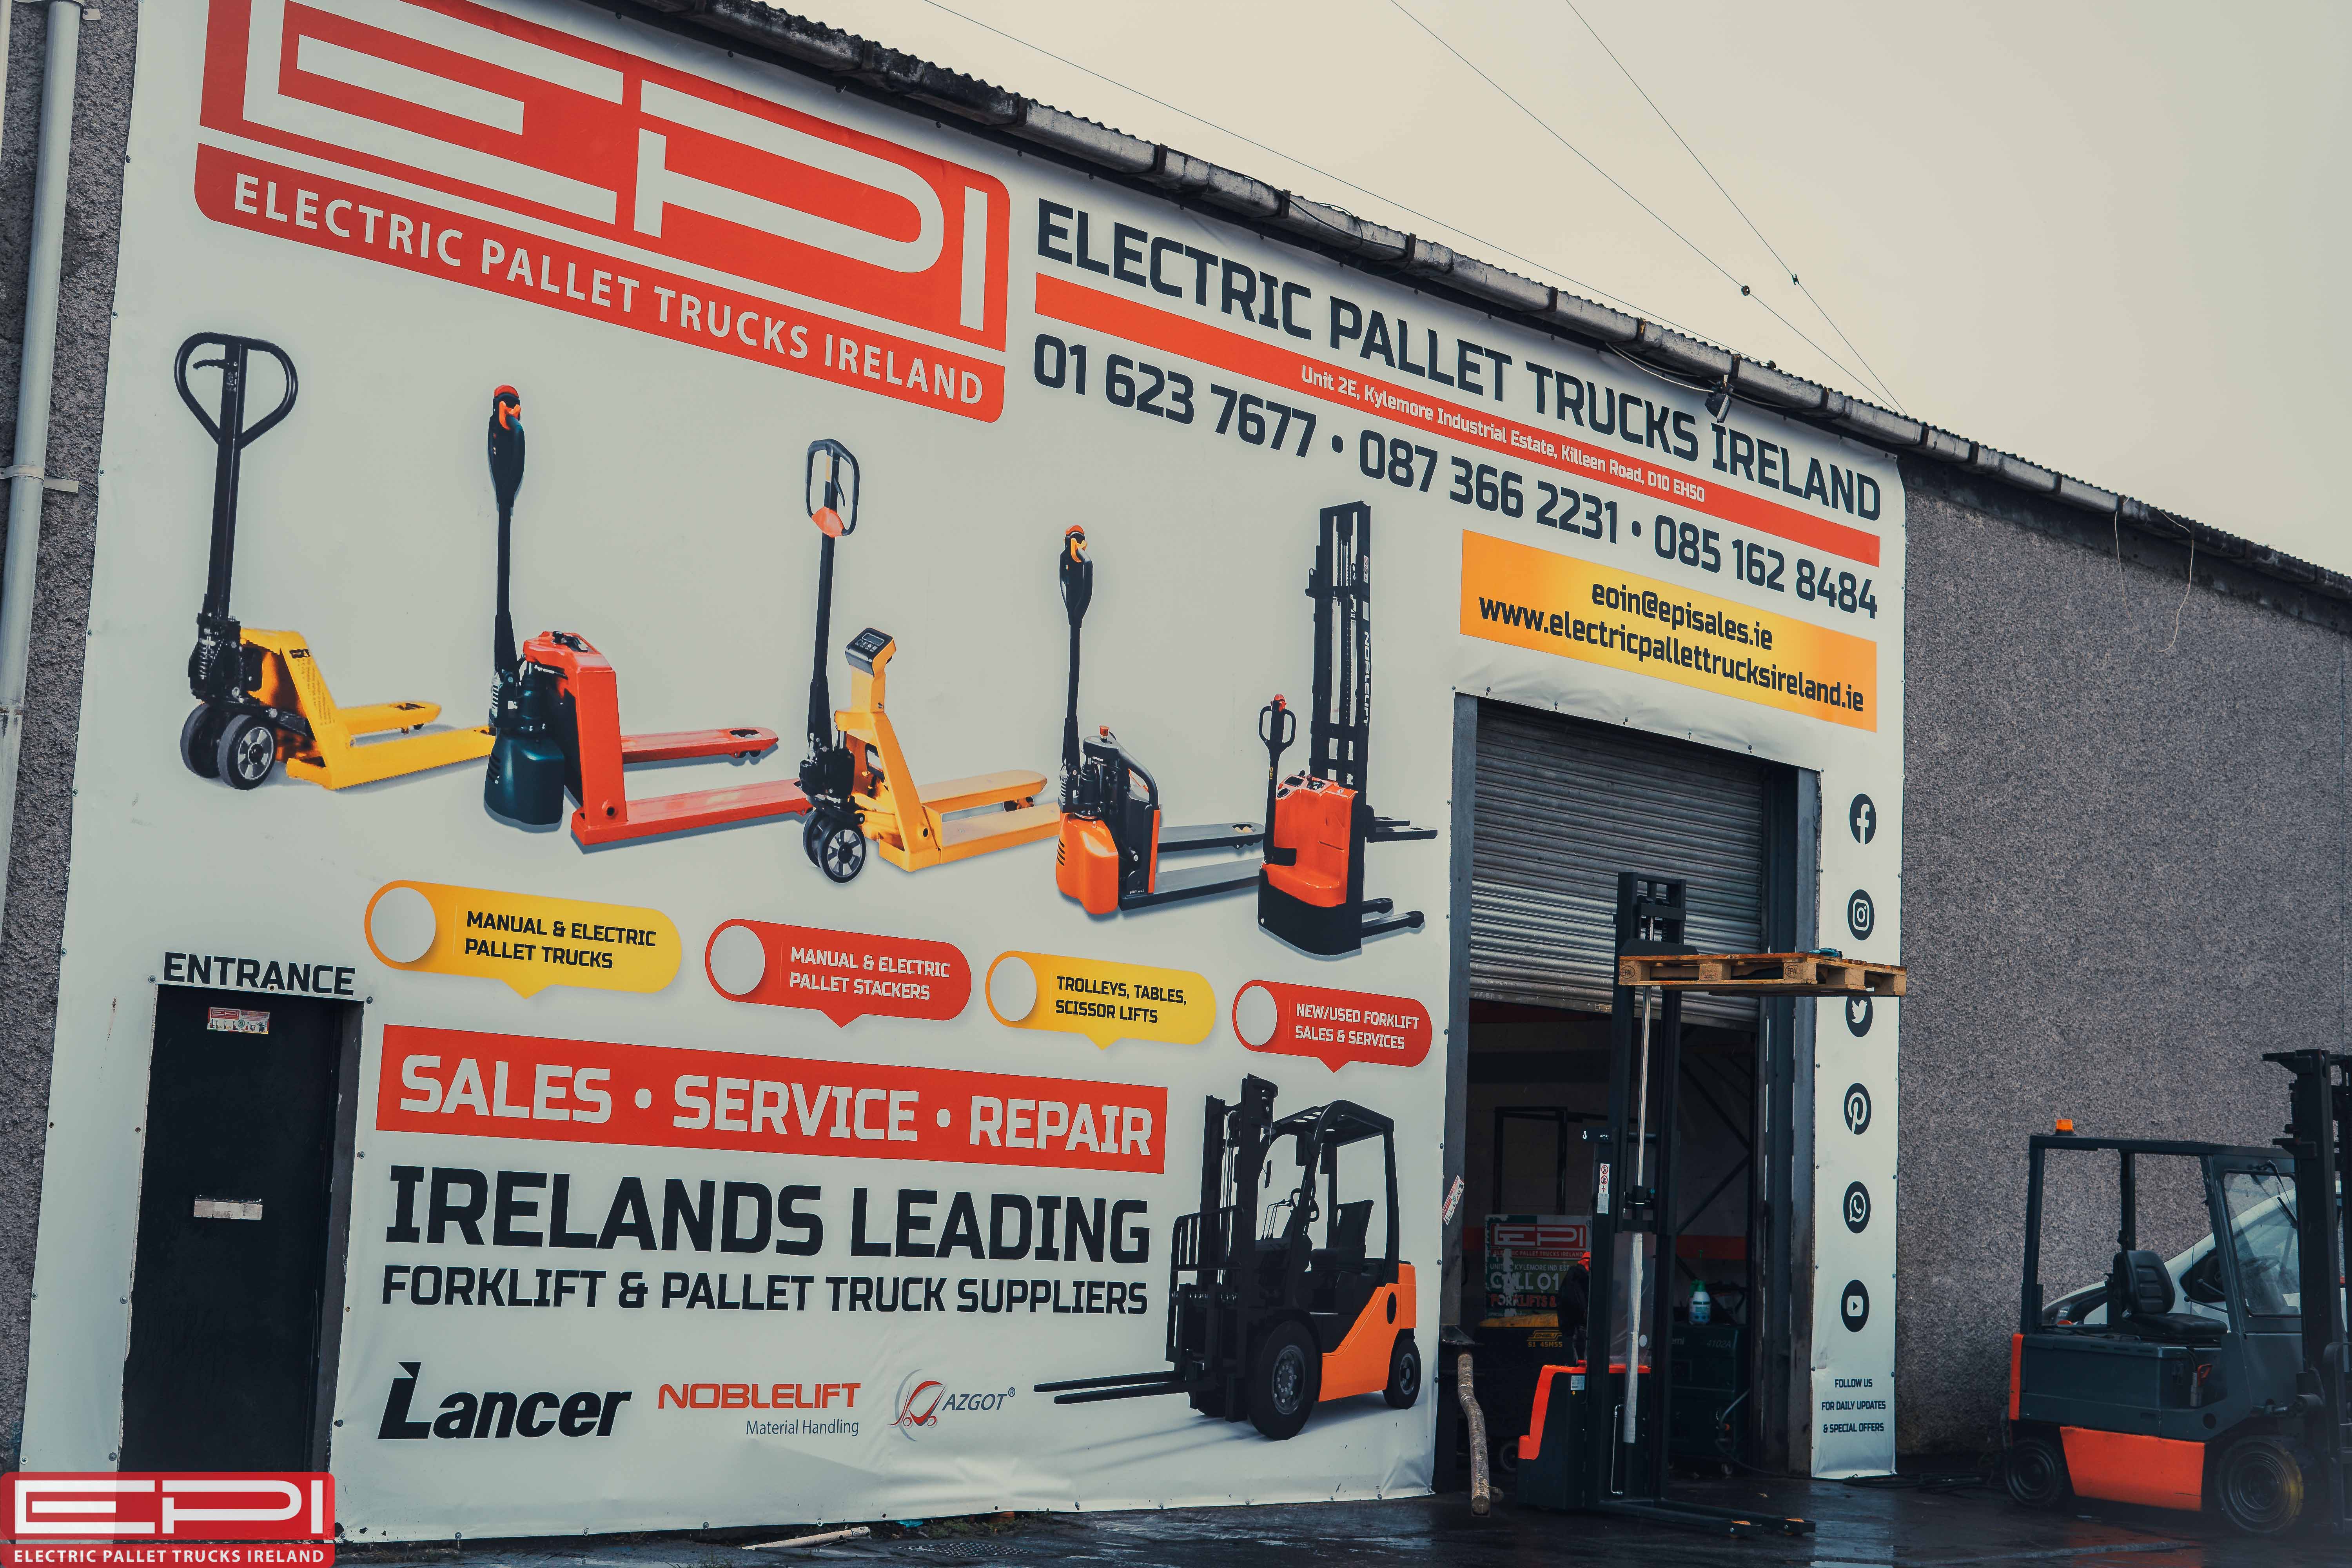 Electric Pallet Trucks Ireland